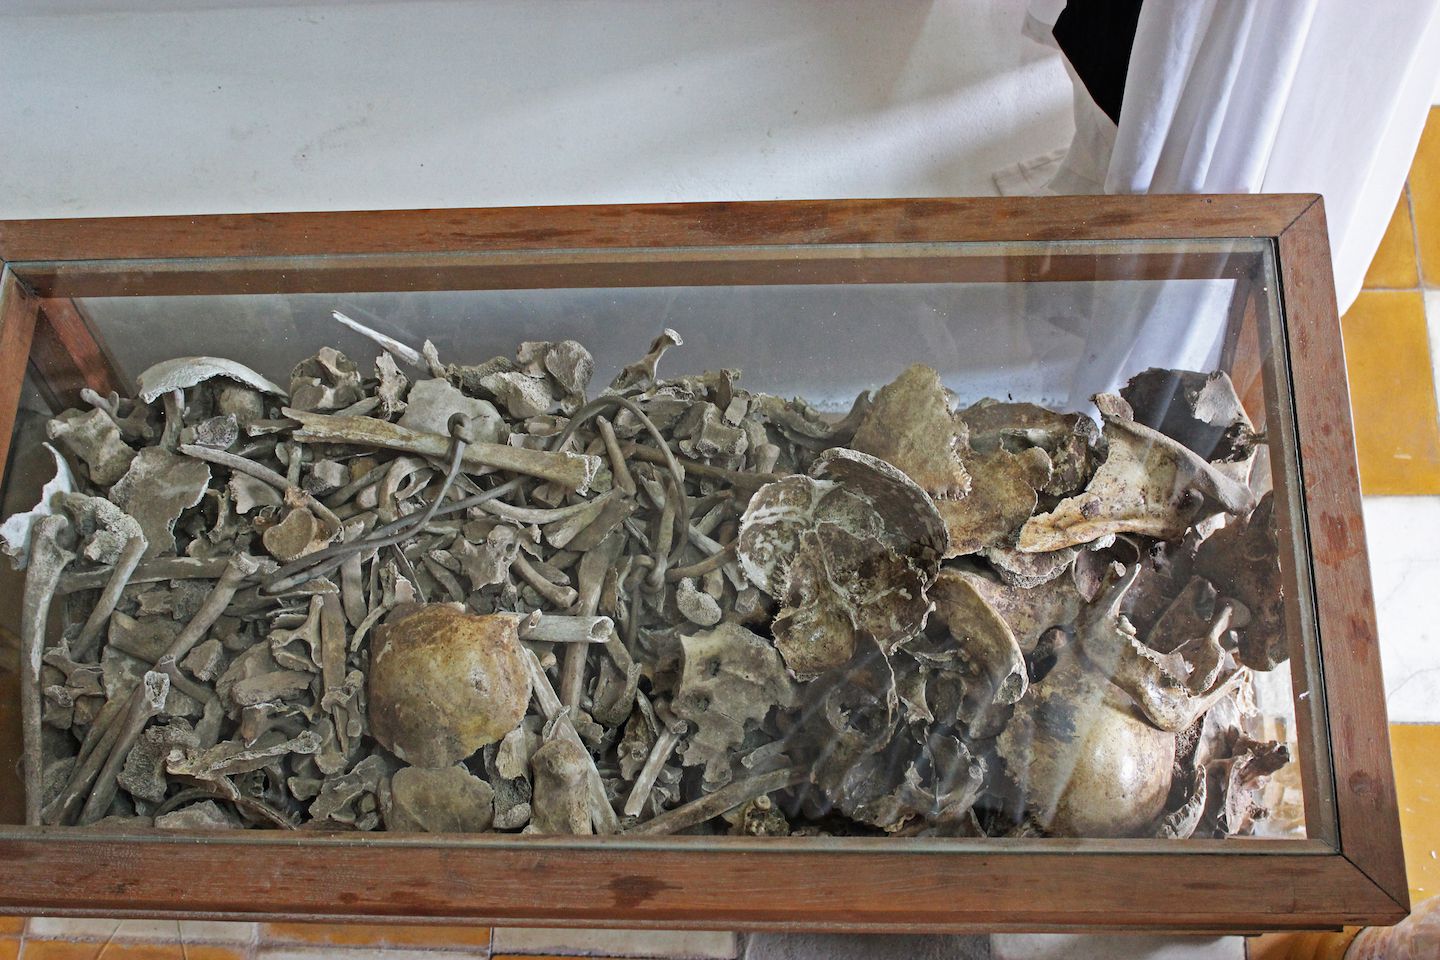 More skulls and bones at S-21